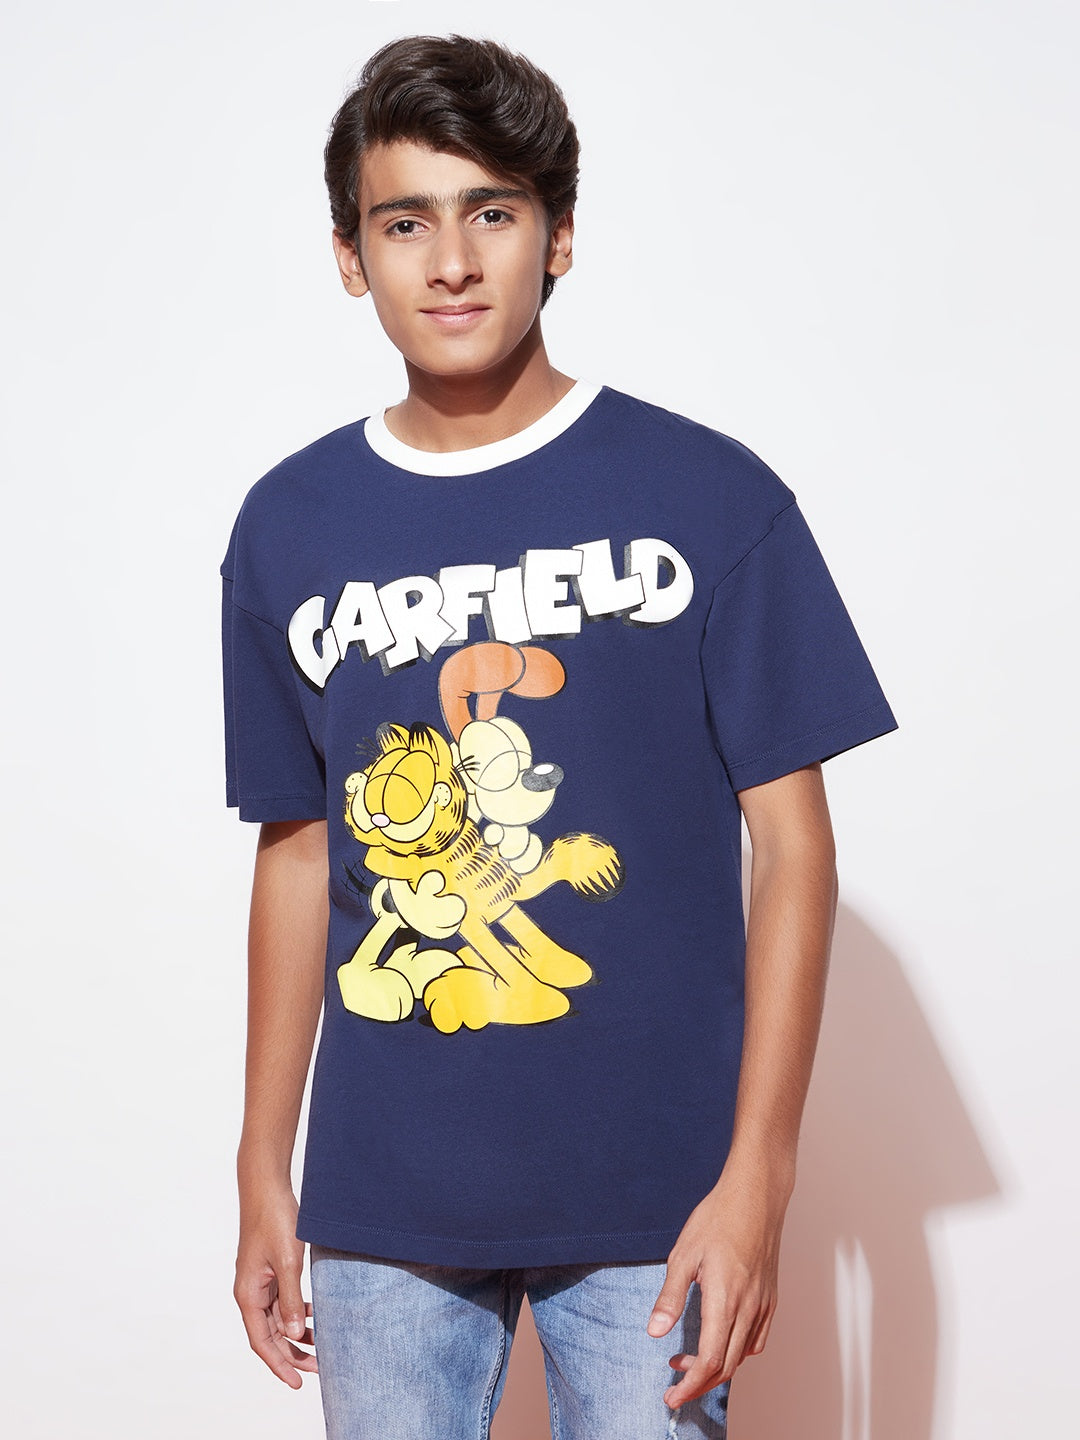 Teen Boy Garfield and Odie Blue Printed T-shirt